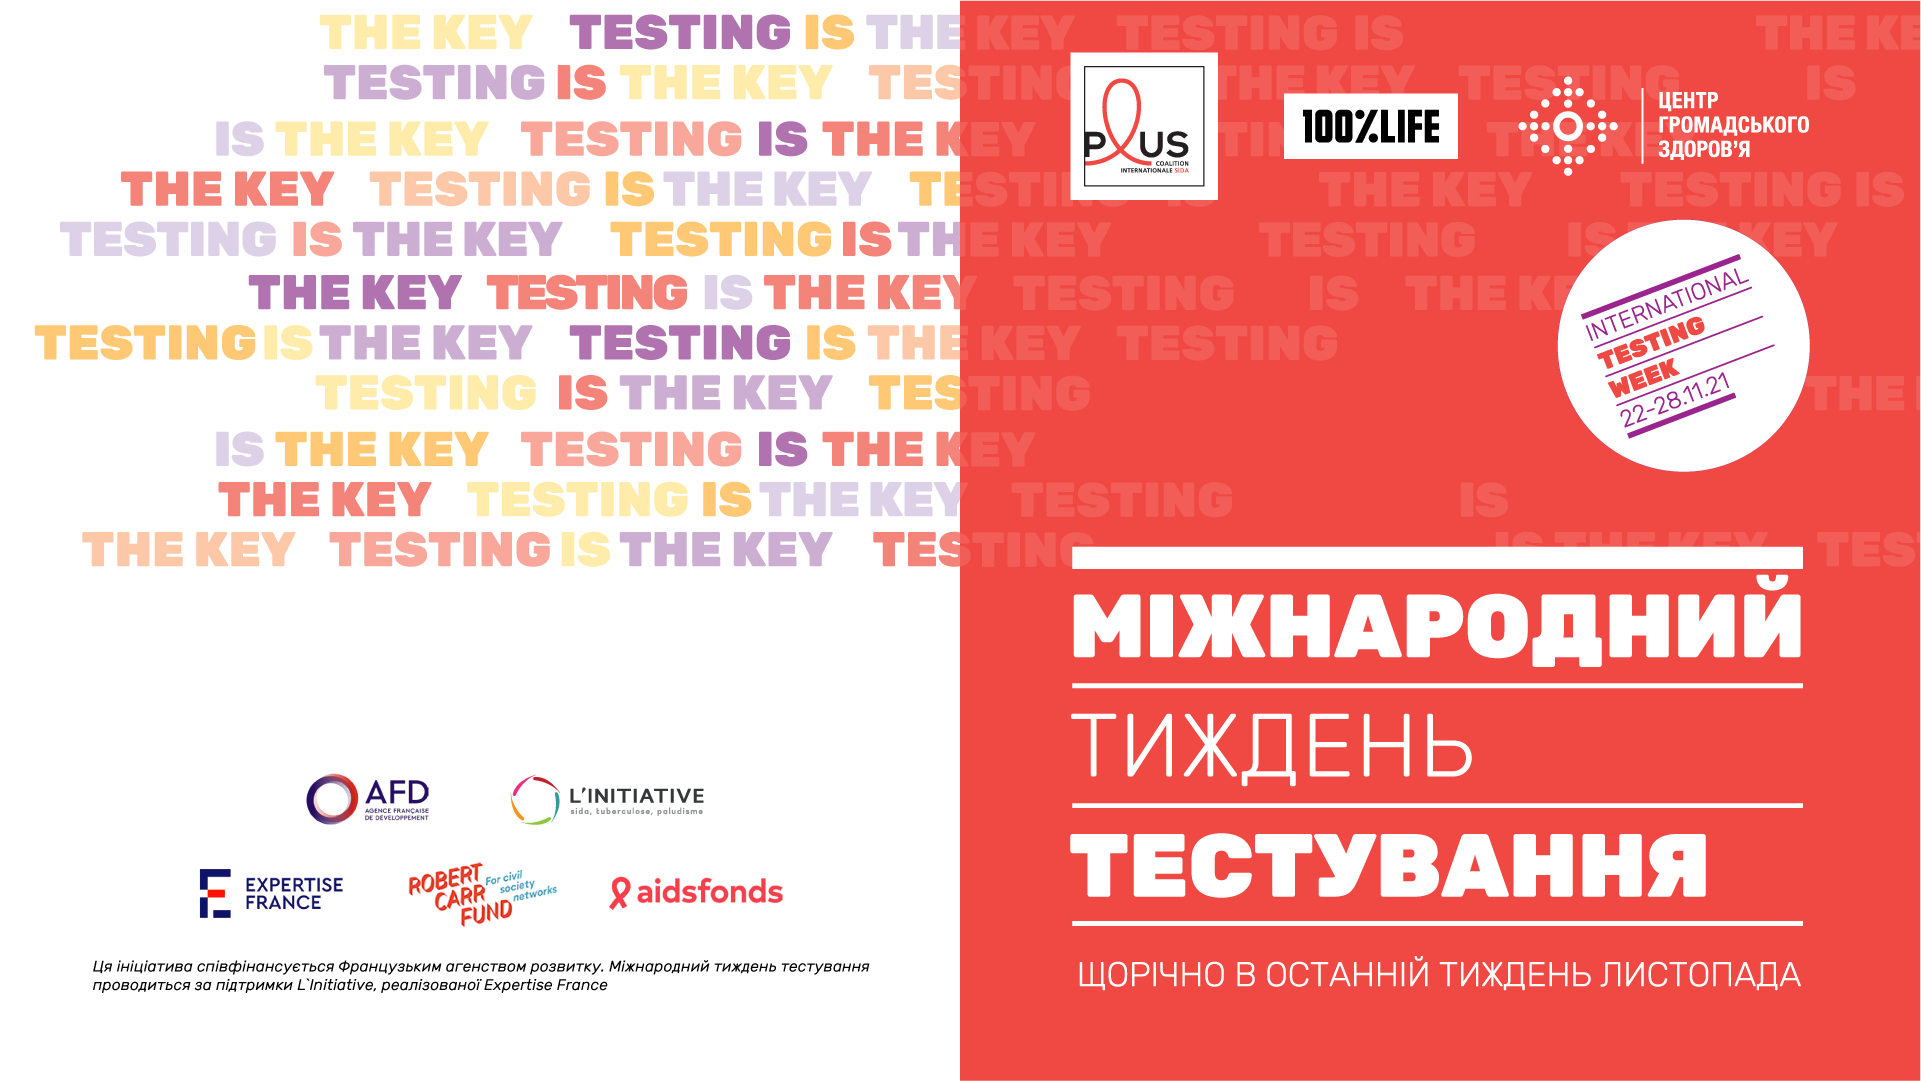 The International Testing Week starts in Ukraine